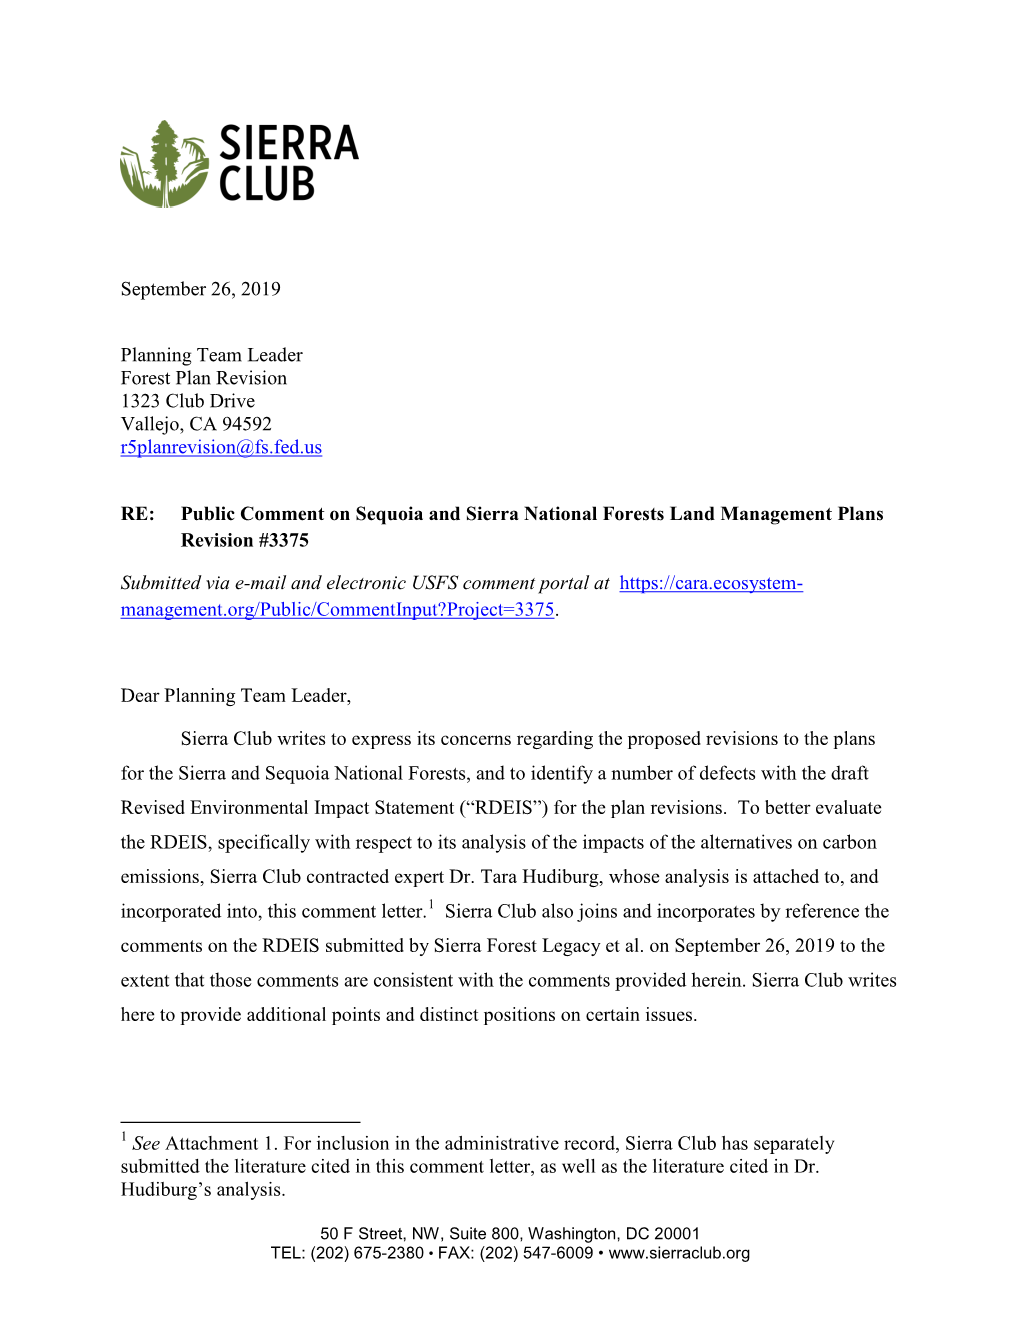 Official Sierra Club Comment Letter